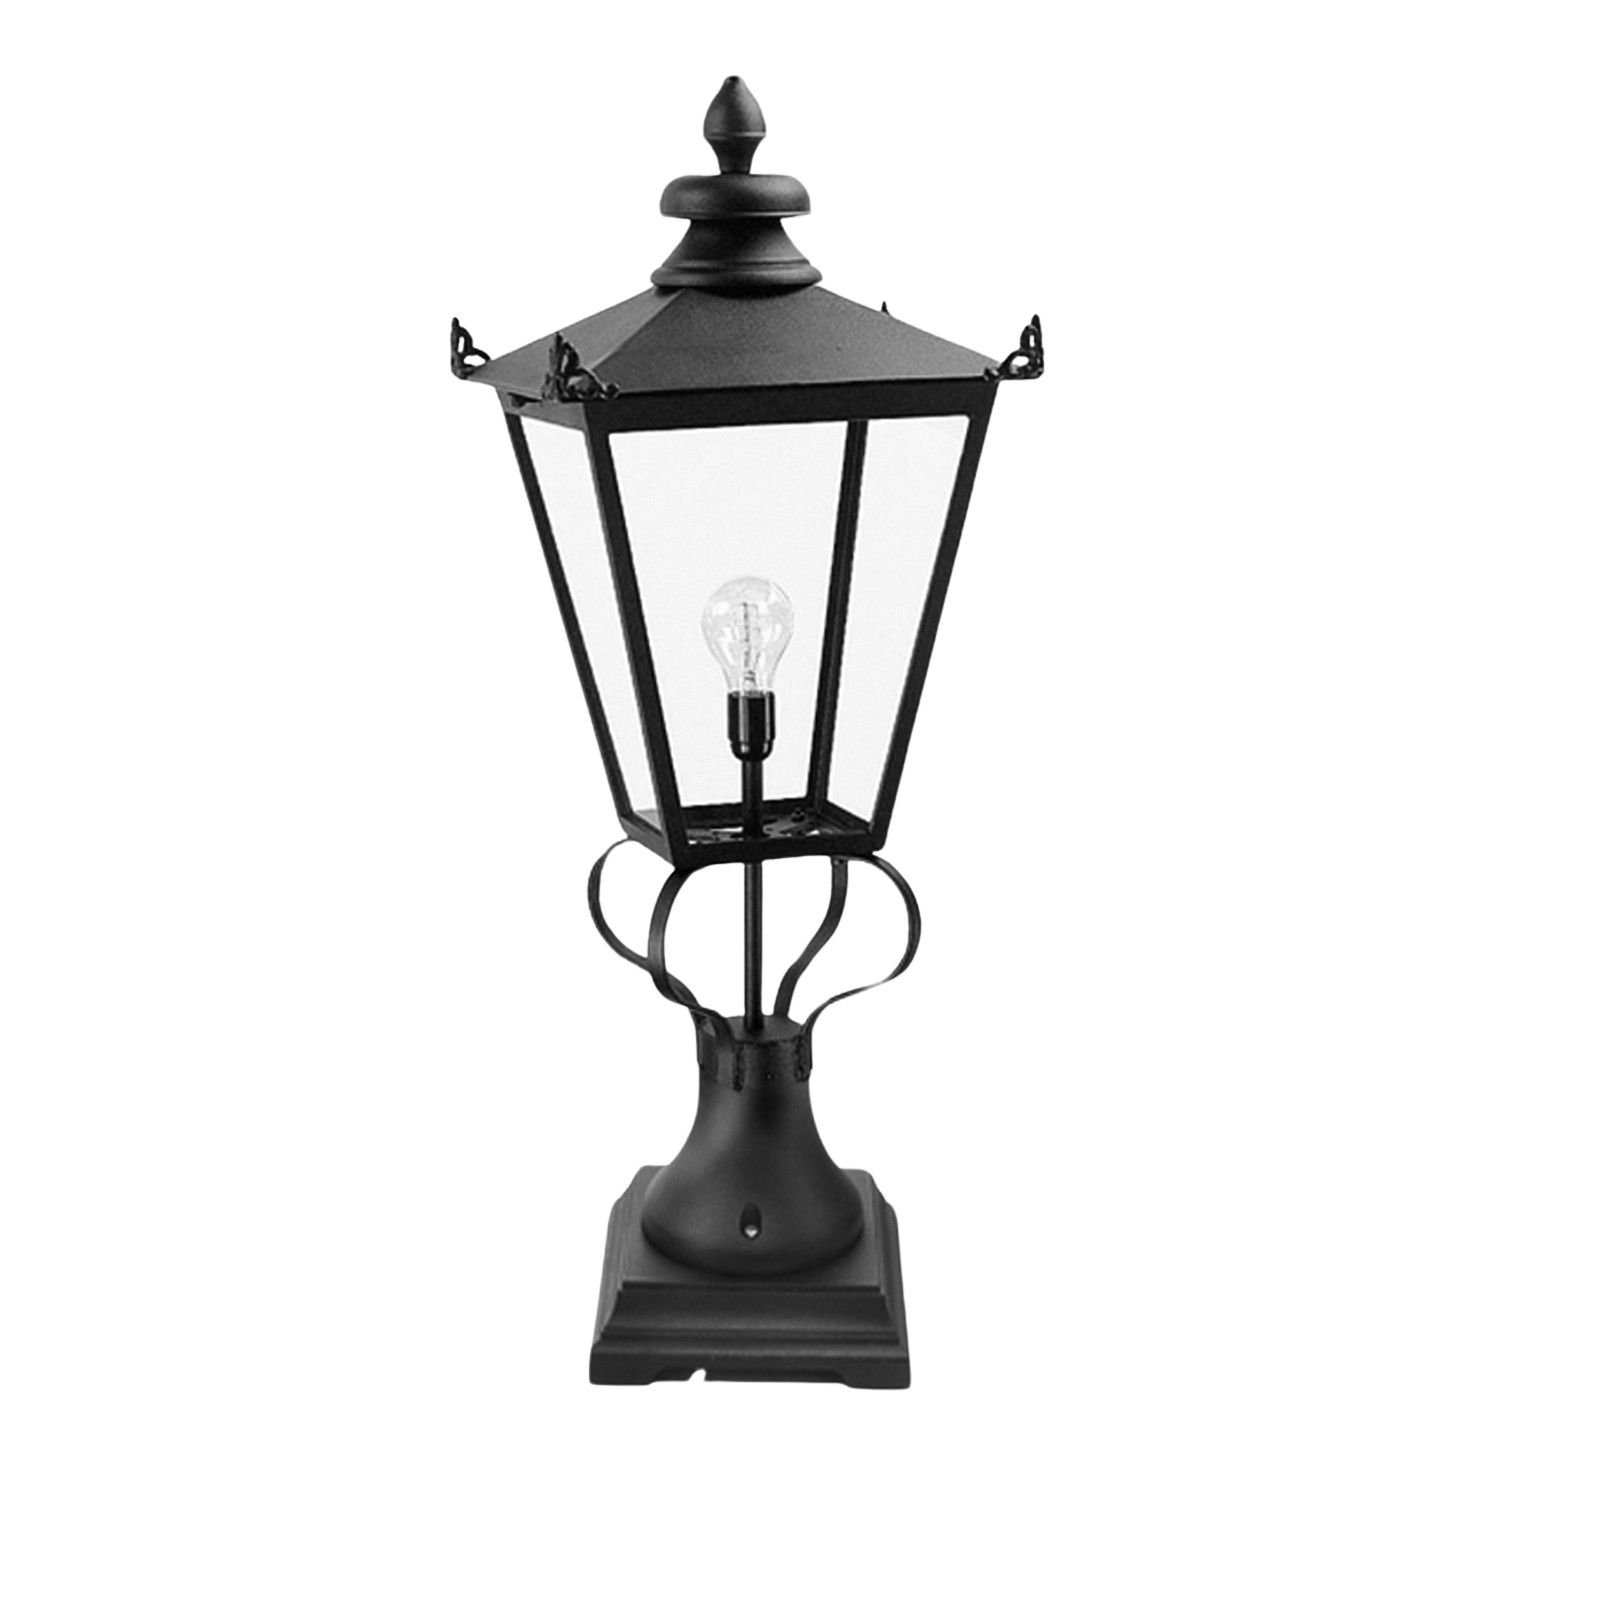 Large period style Wilmslow newel lantern